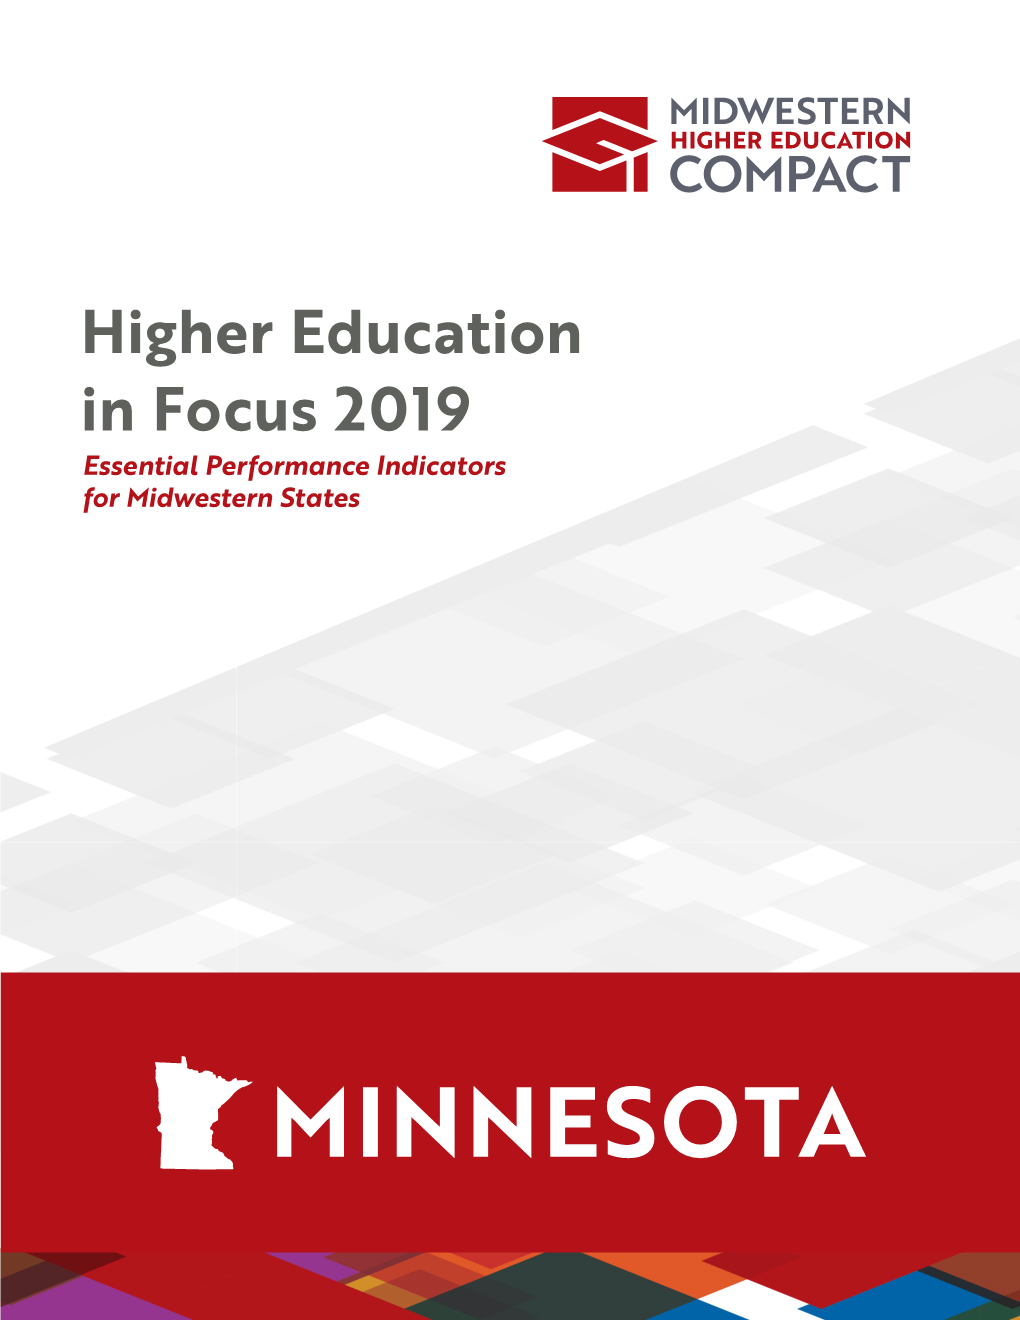 Higher Education in Focus 2019: Minnesota